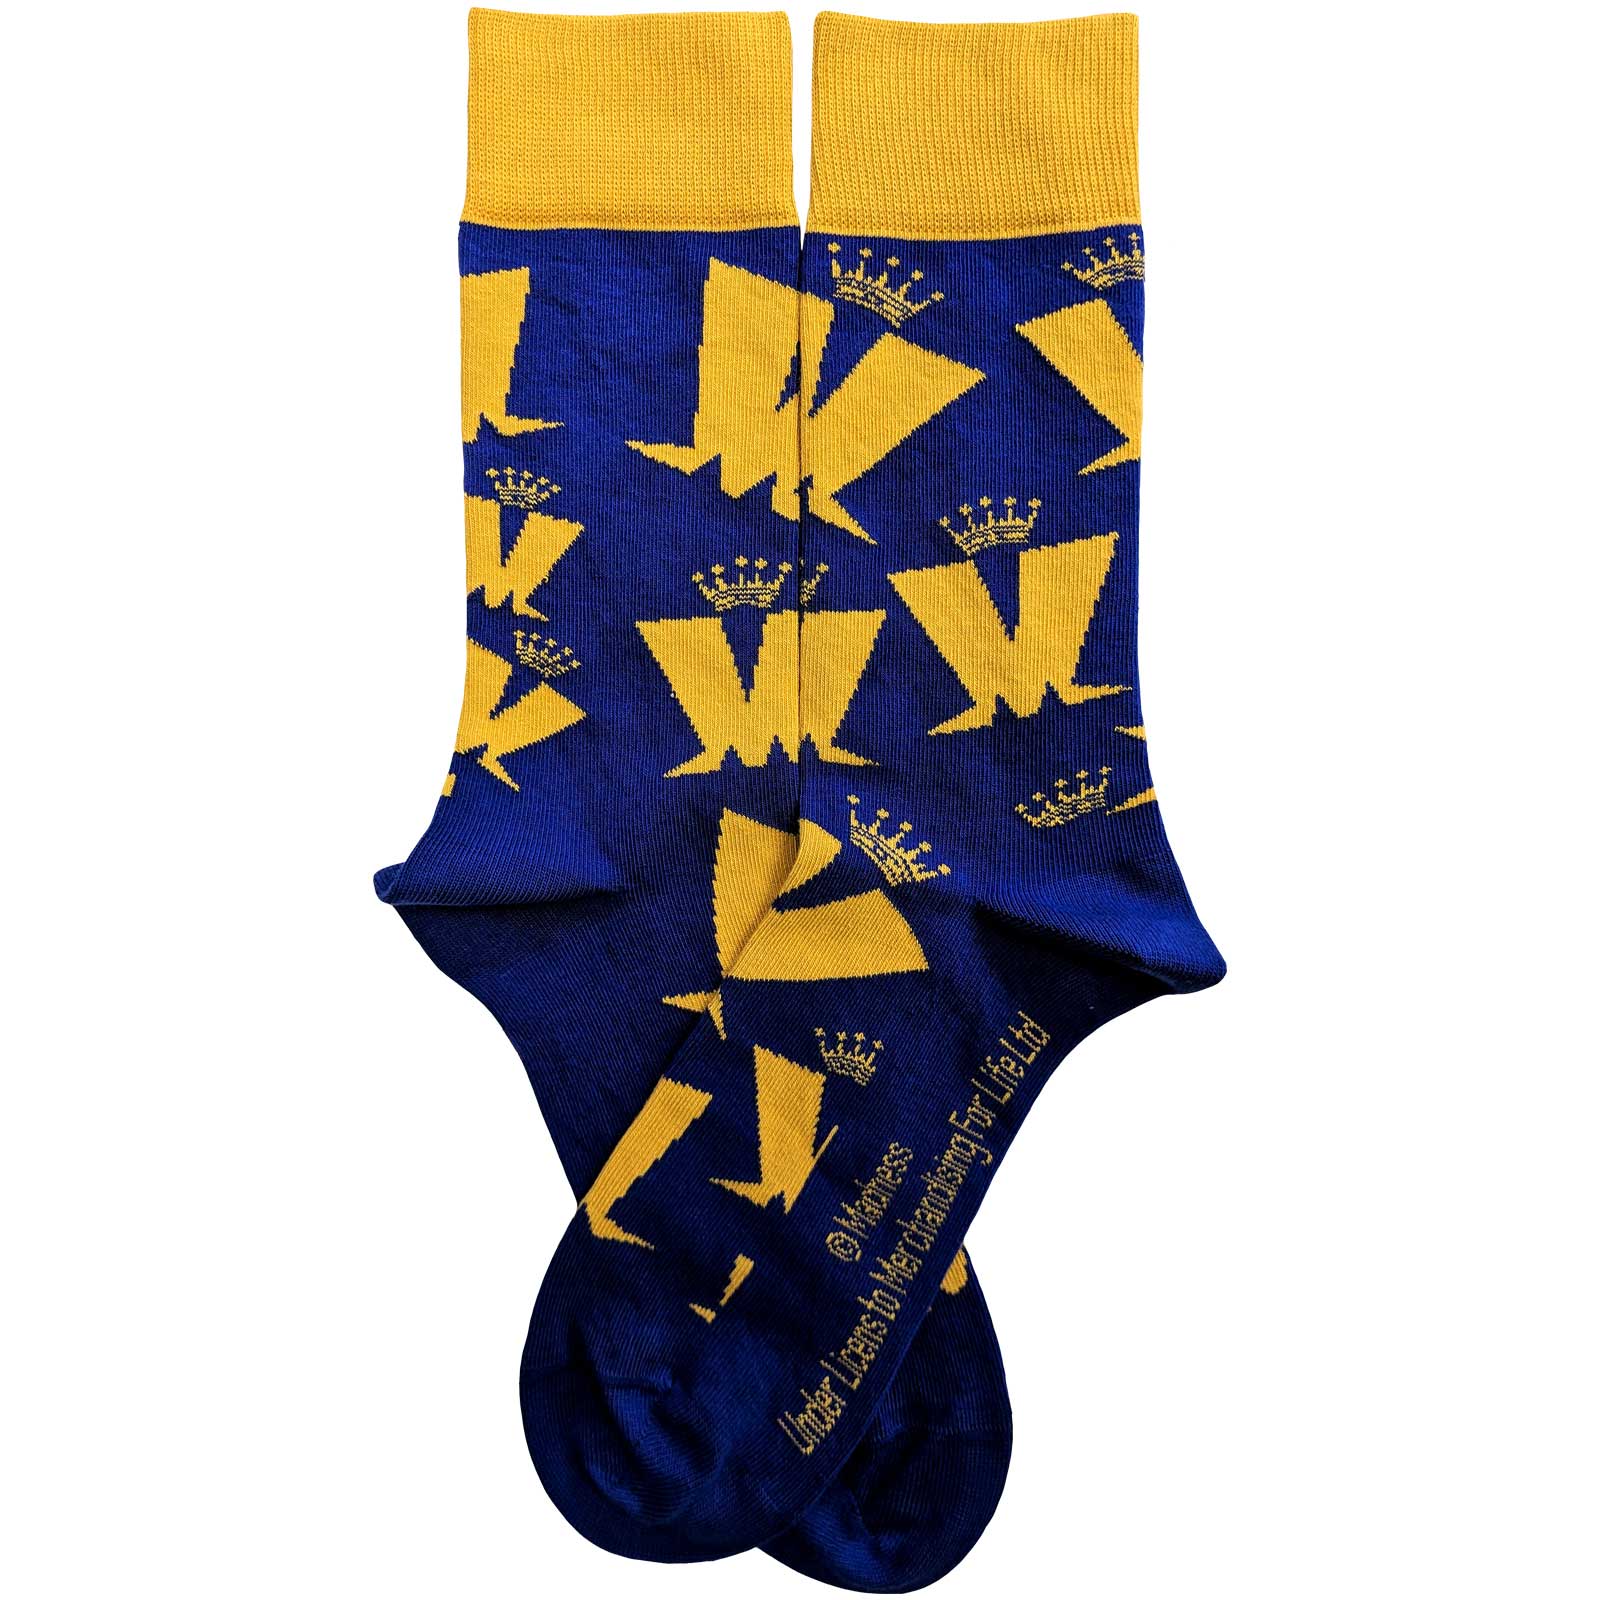 Madness Unisex Ankle Socks - Crown & M Pattern Blue/Yellow (UK Size 7-11)